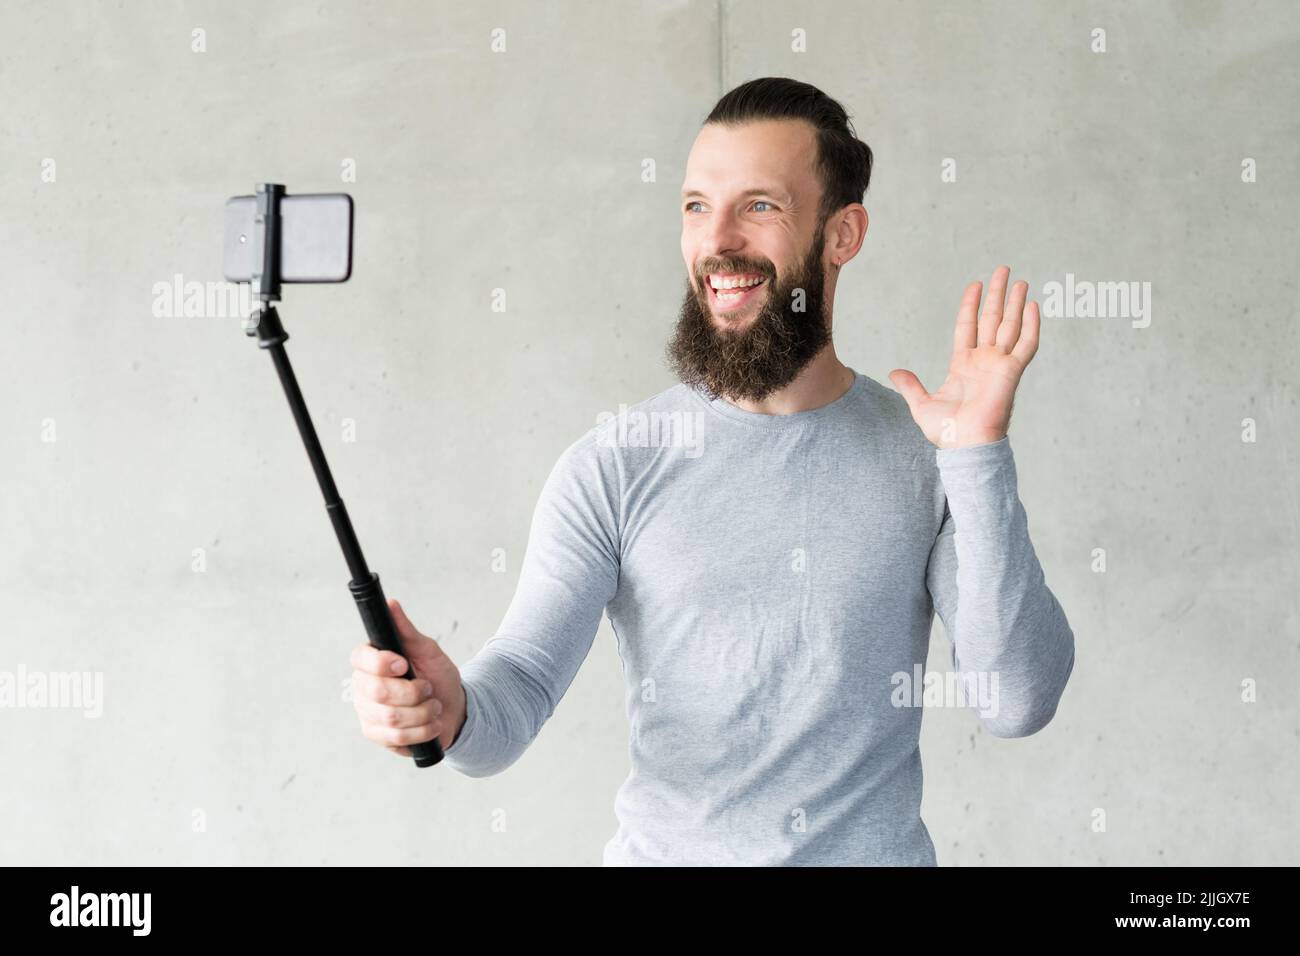 blogger camera man selfie phone monopod video Stock Photo